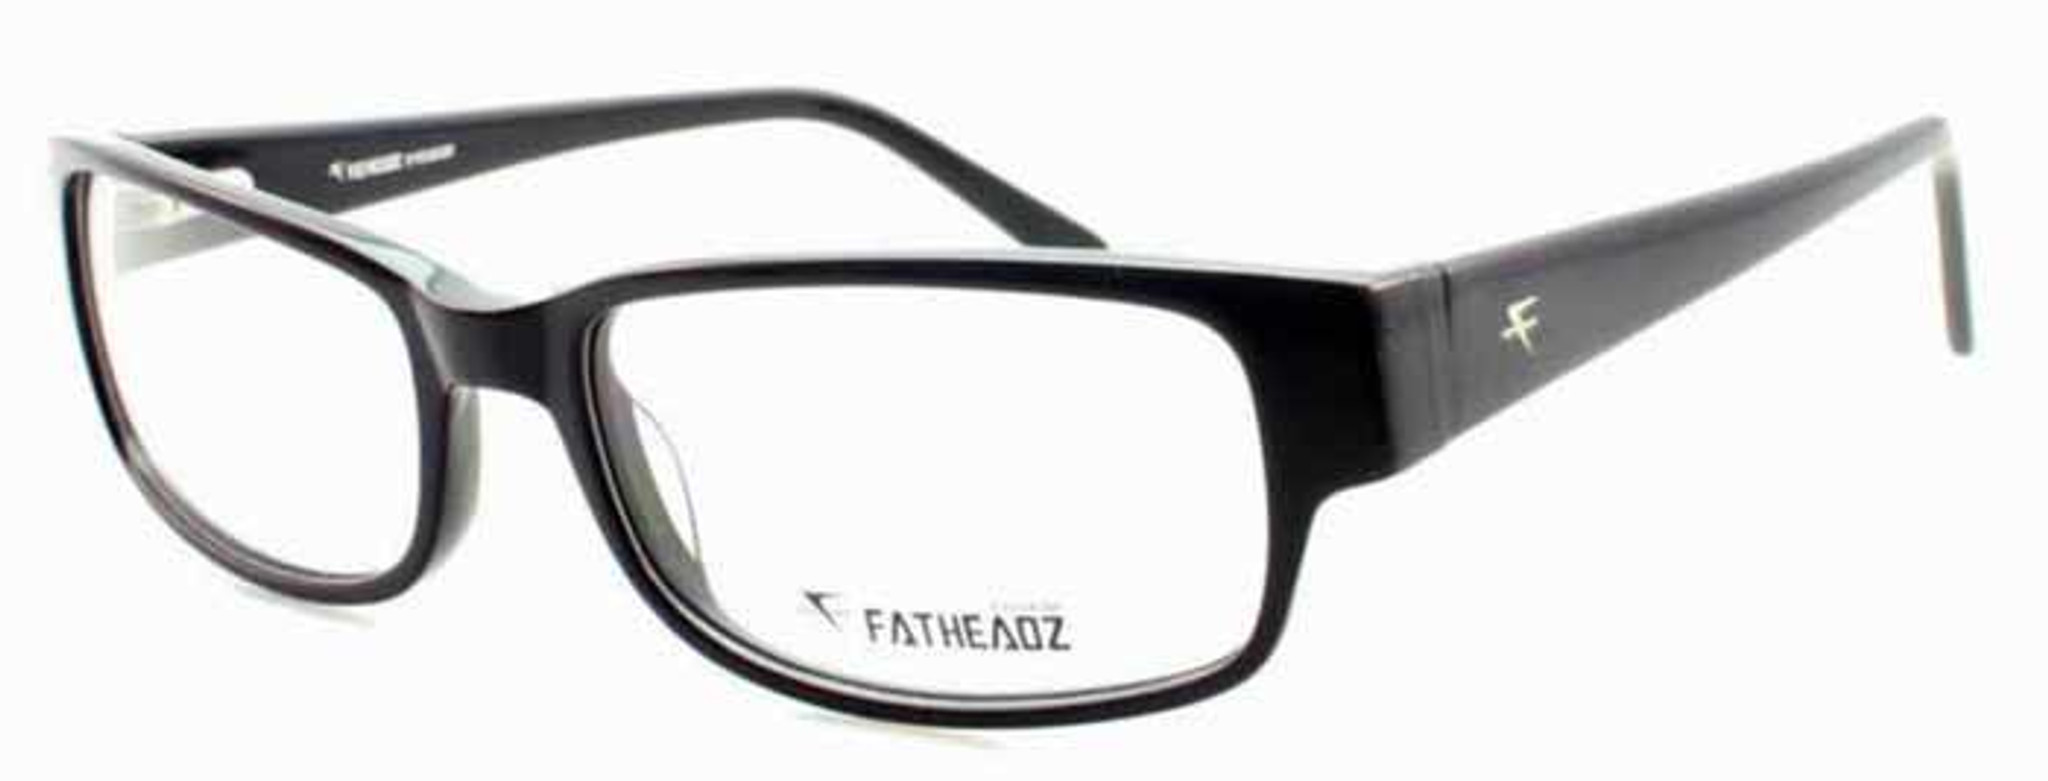 Fatheadz Jaxsonian Extra Large Glasses Frame FH-0041